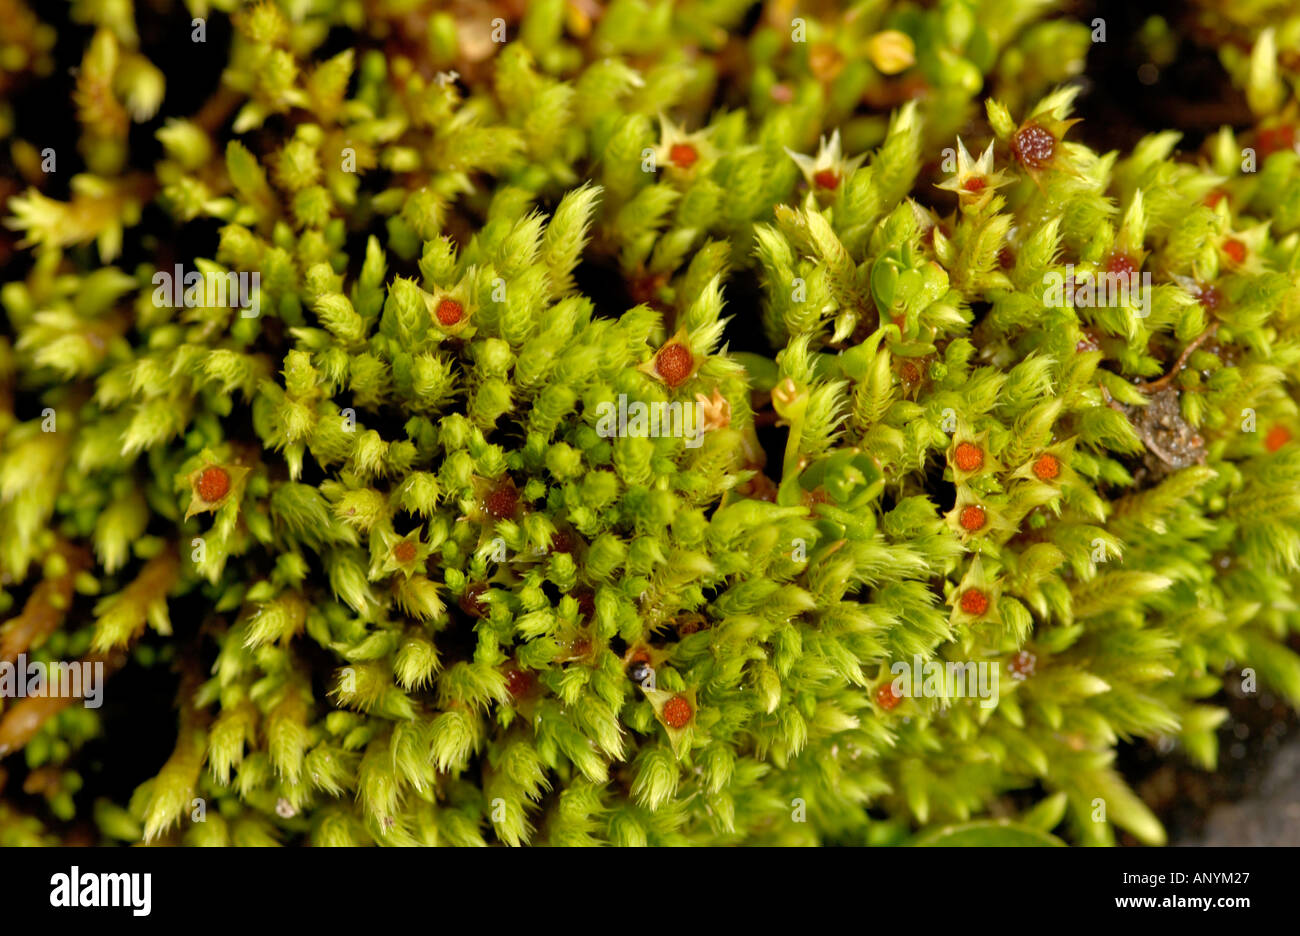 Schistidium apocarpum (Schistidium moss), Aran valley, Spain Stock Photo